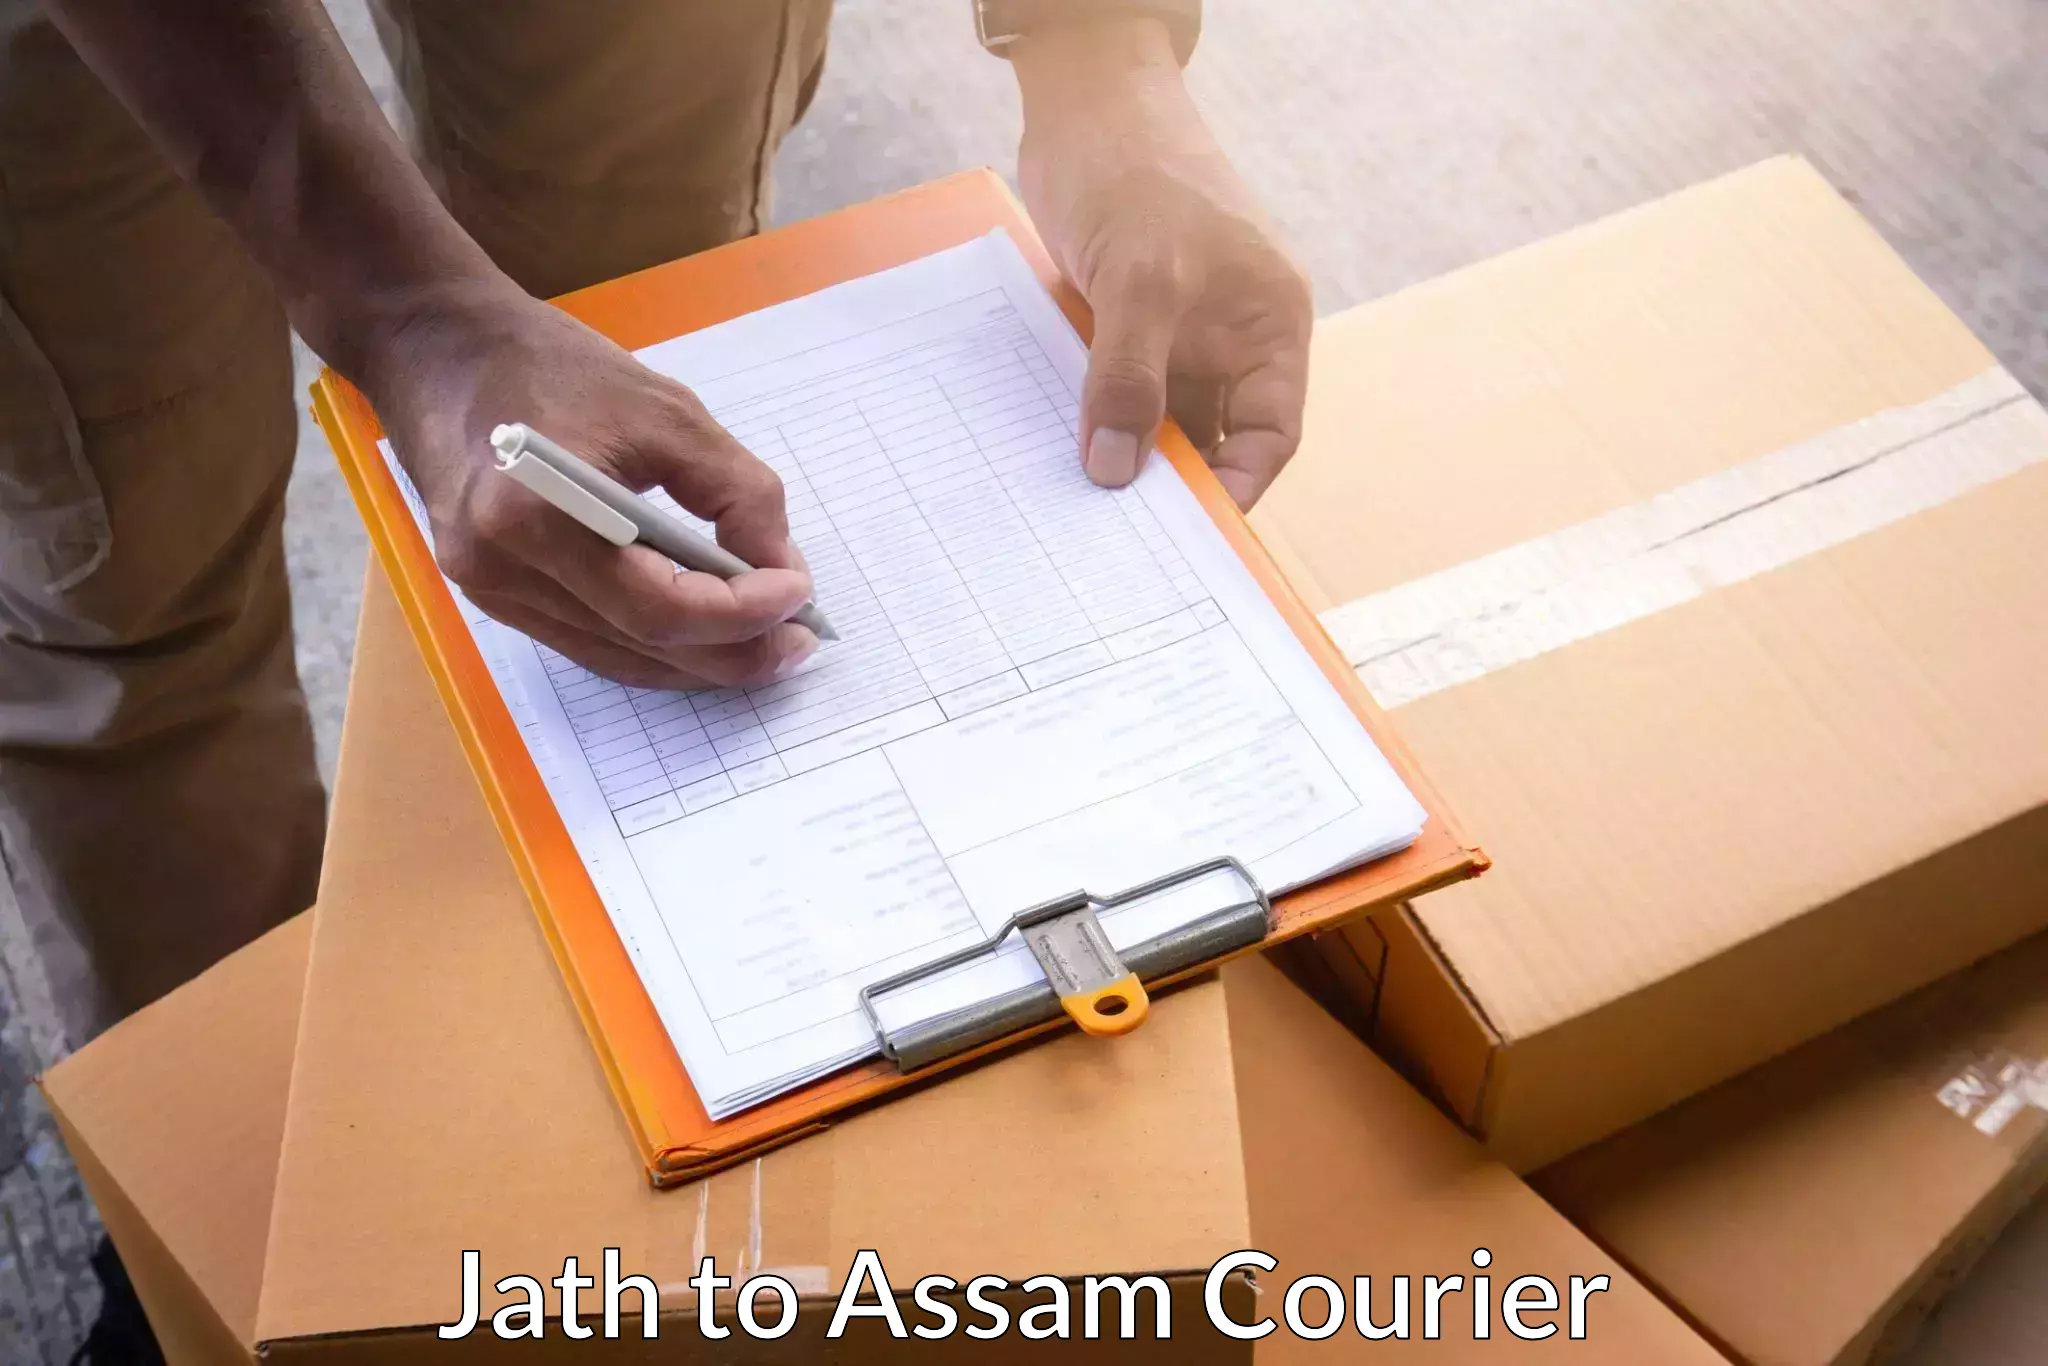 Courier service innovation Jath to Assam